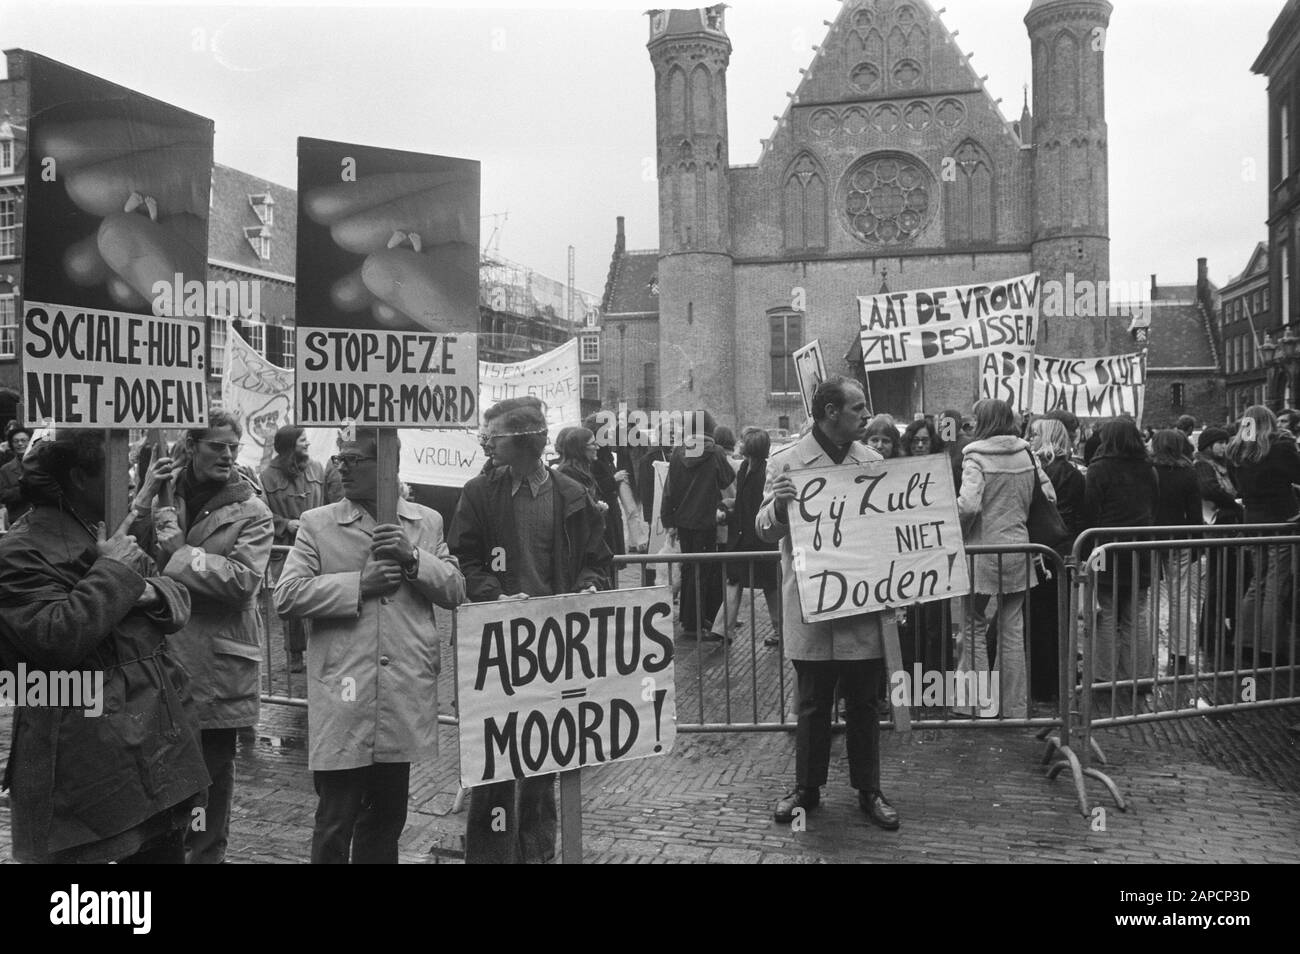 Abortus-demonstration at Binnenhof Date: October 30, 1974 Location: Binnenhof, The Hague, Zuid-Holland Keywords: demonstrations Stock Photo